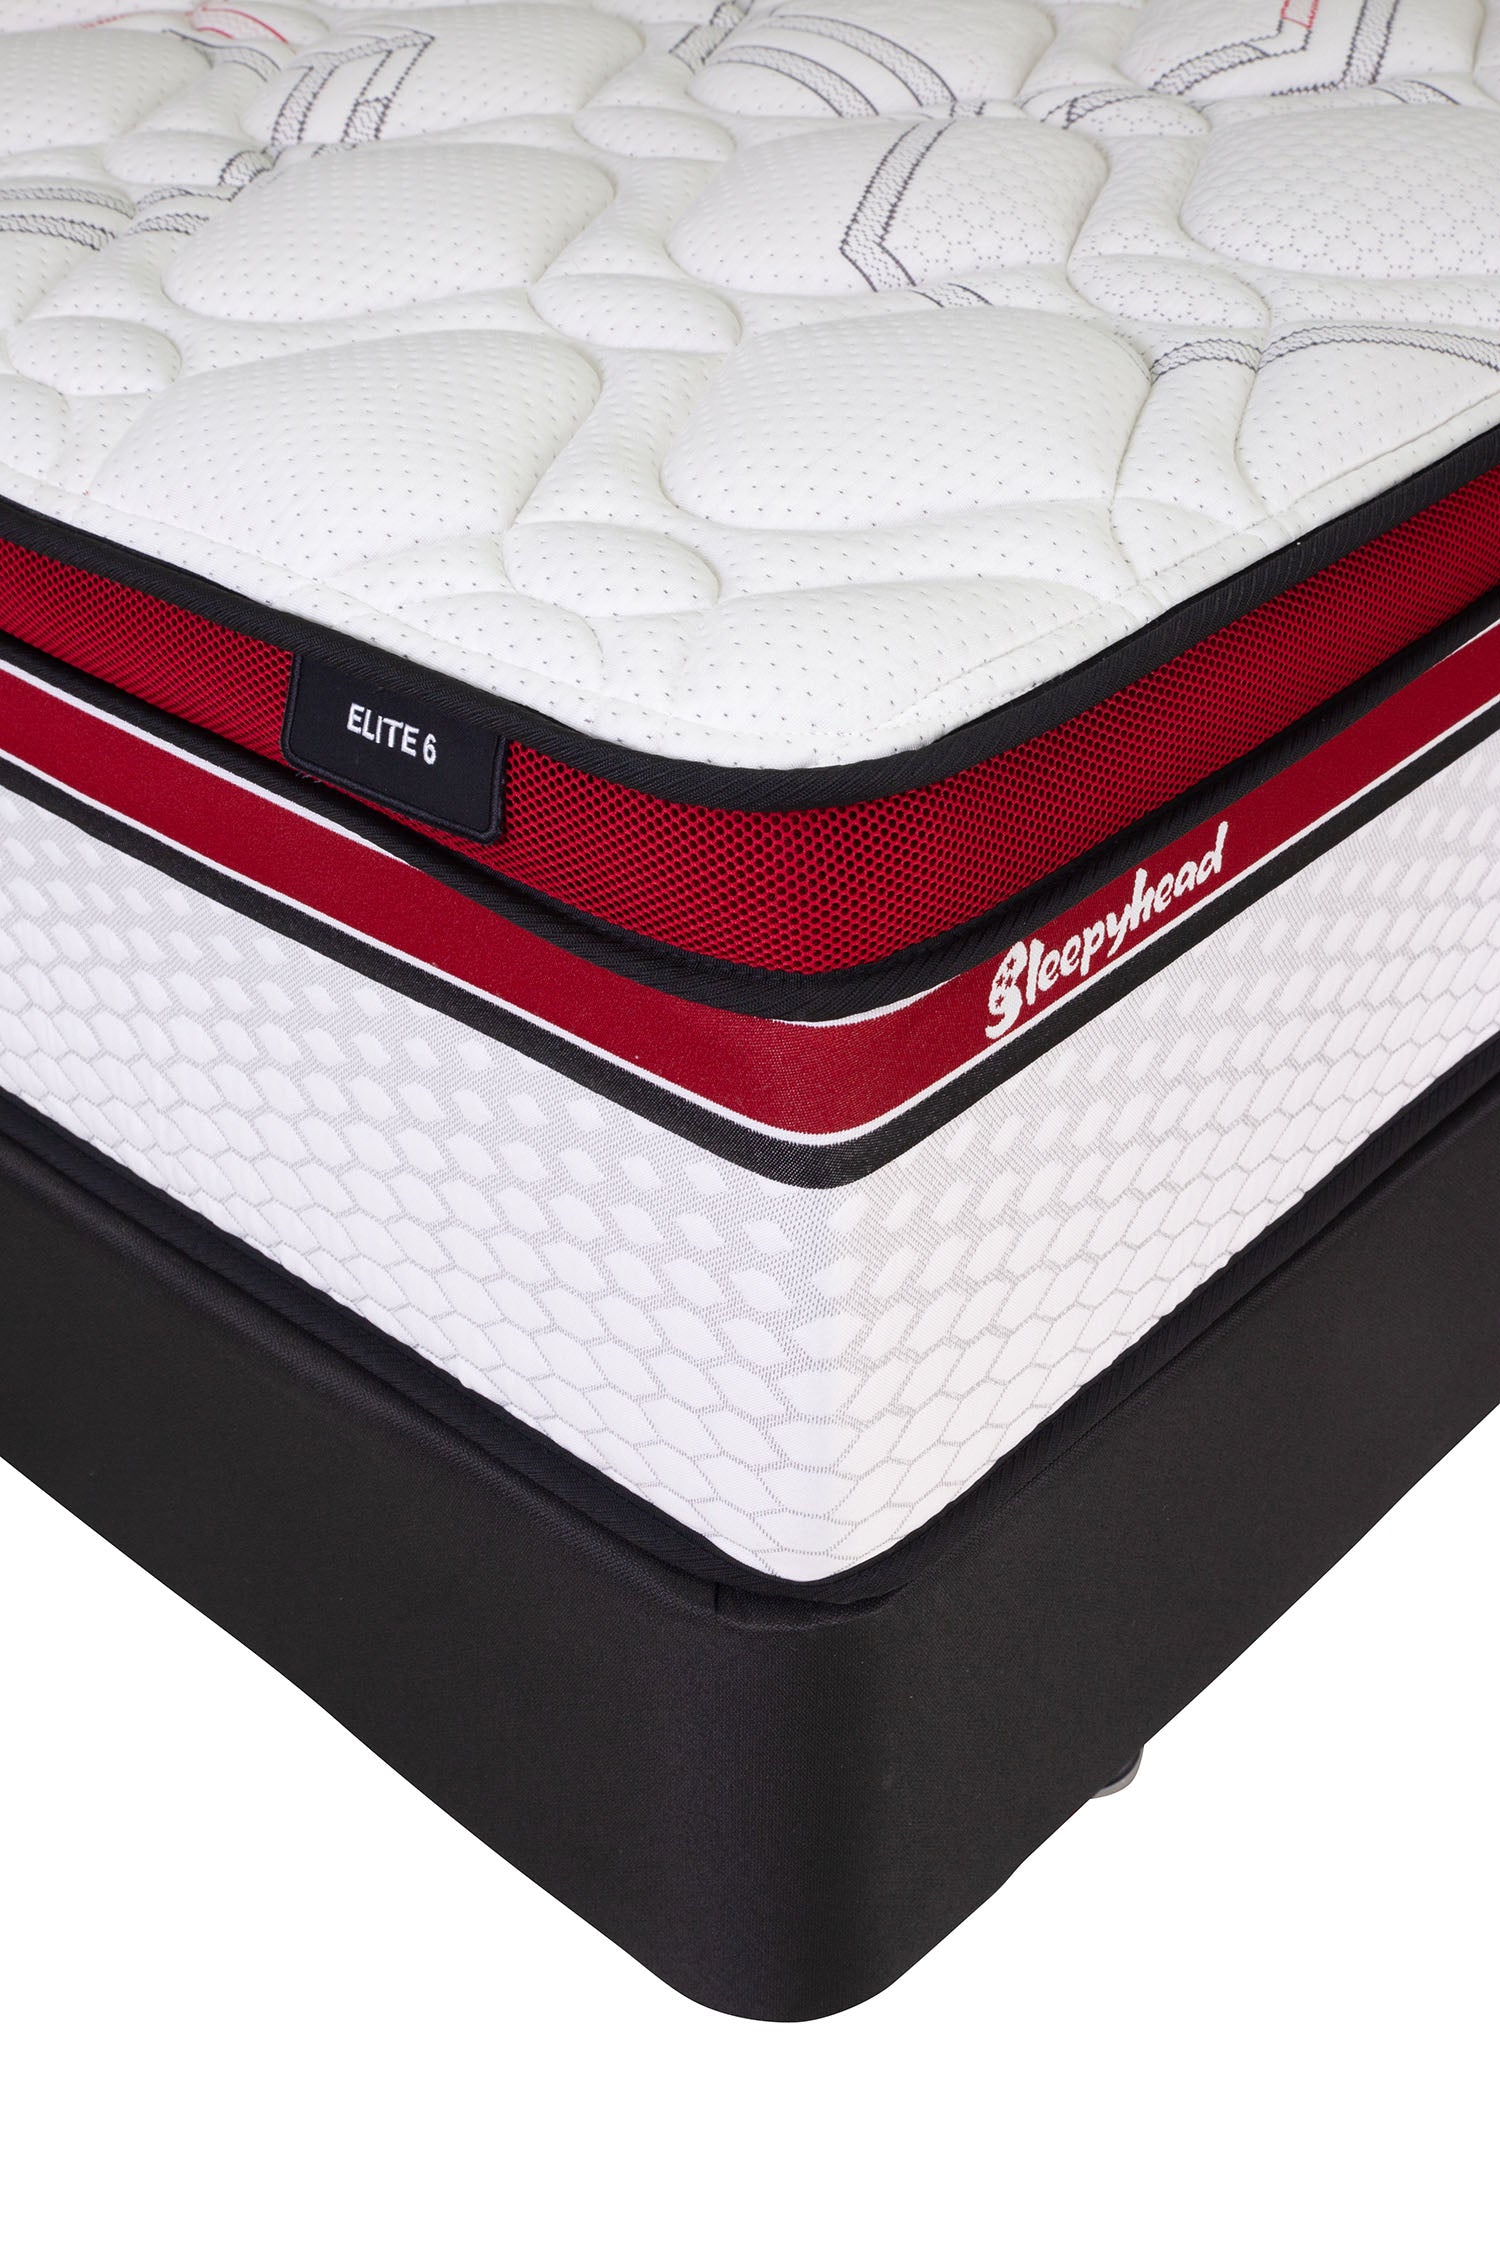 elite6-super-king-mattress-3